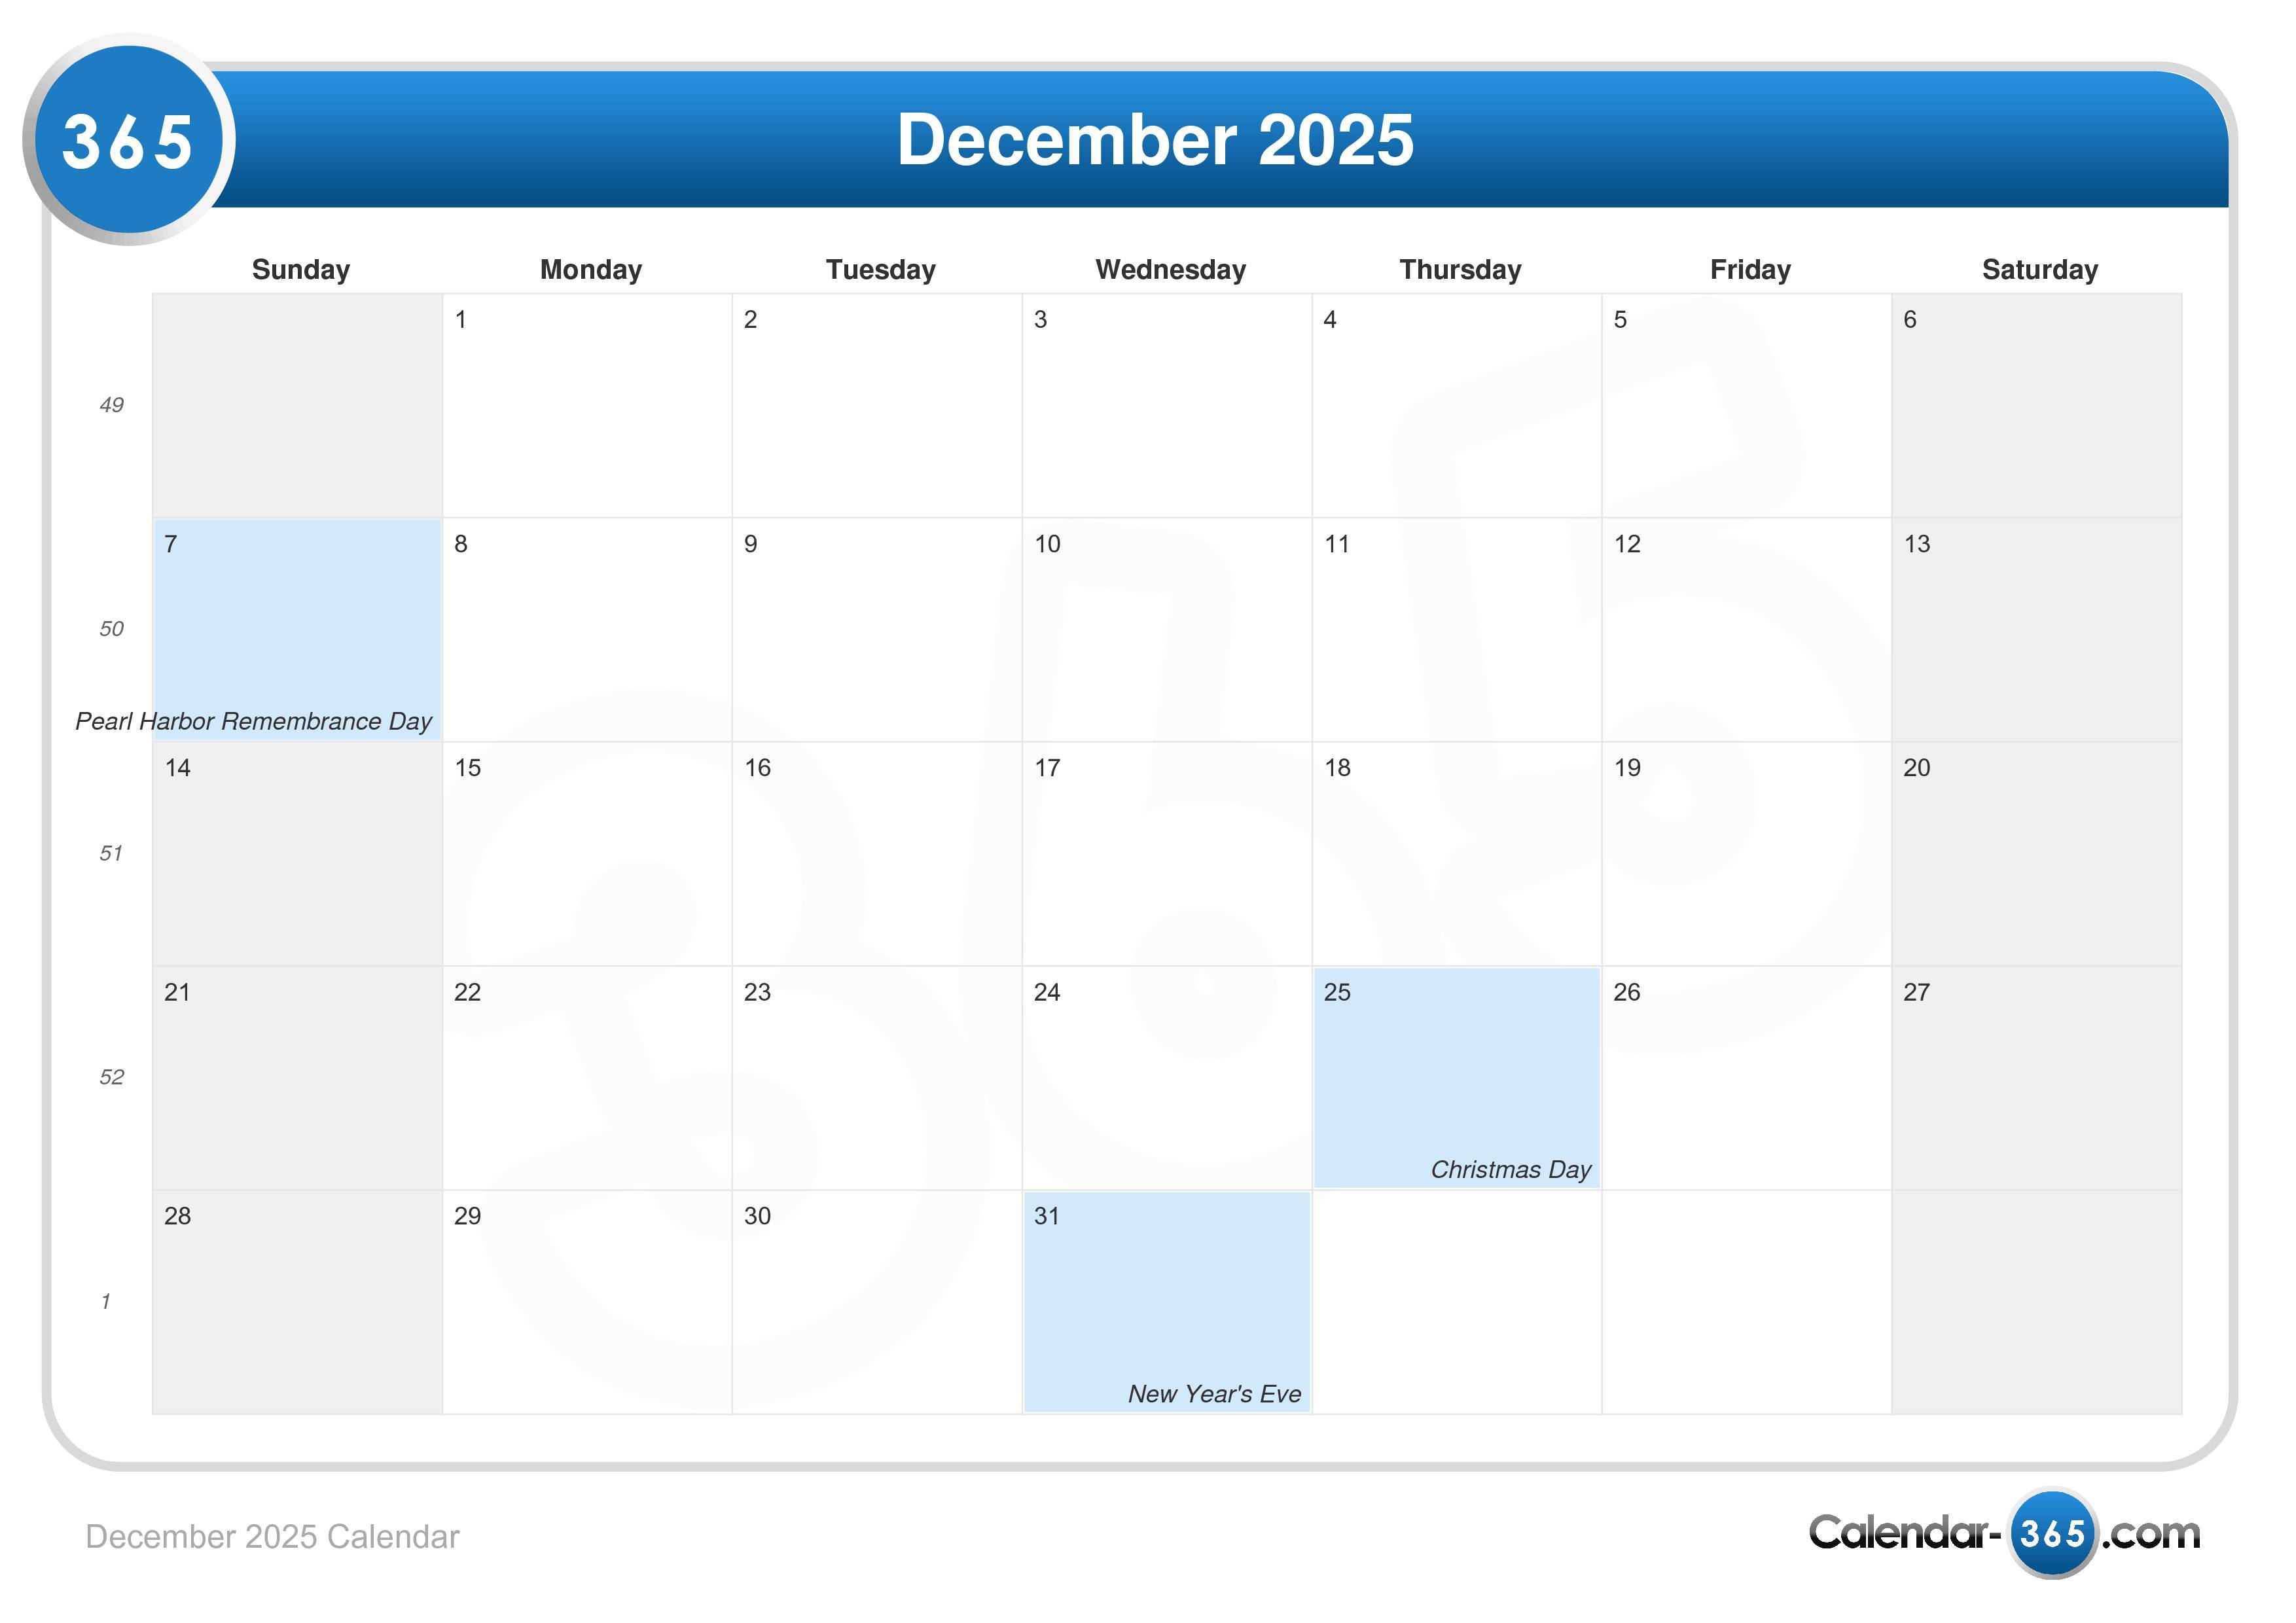 basic-calendar-for-december-2025-wikidates